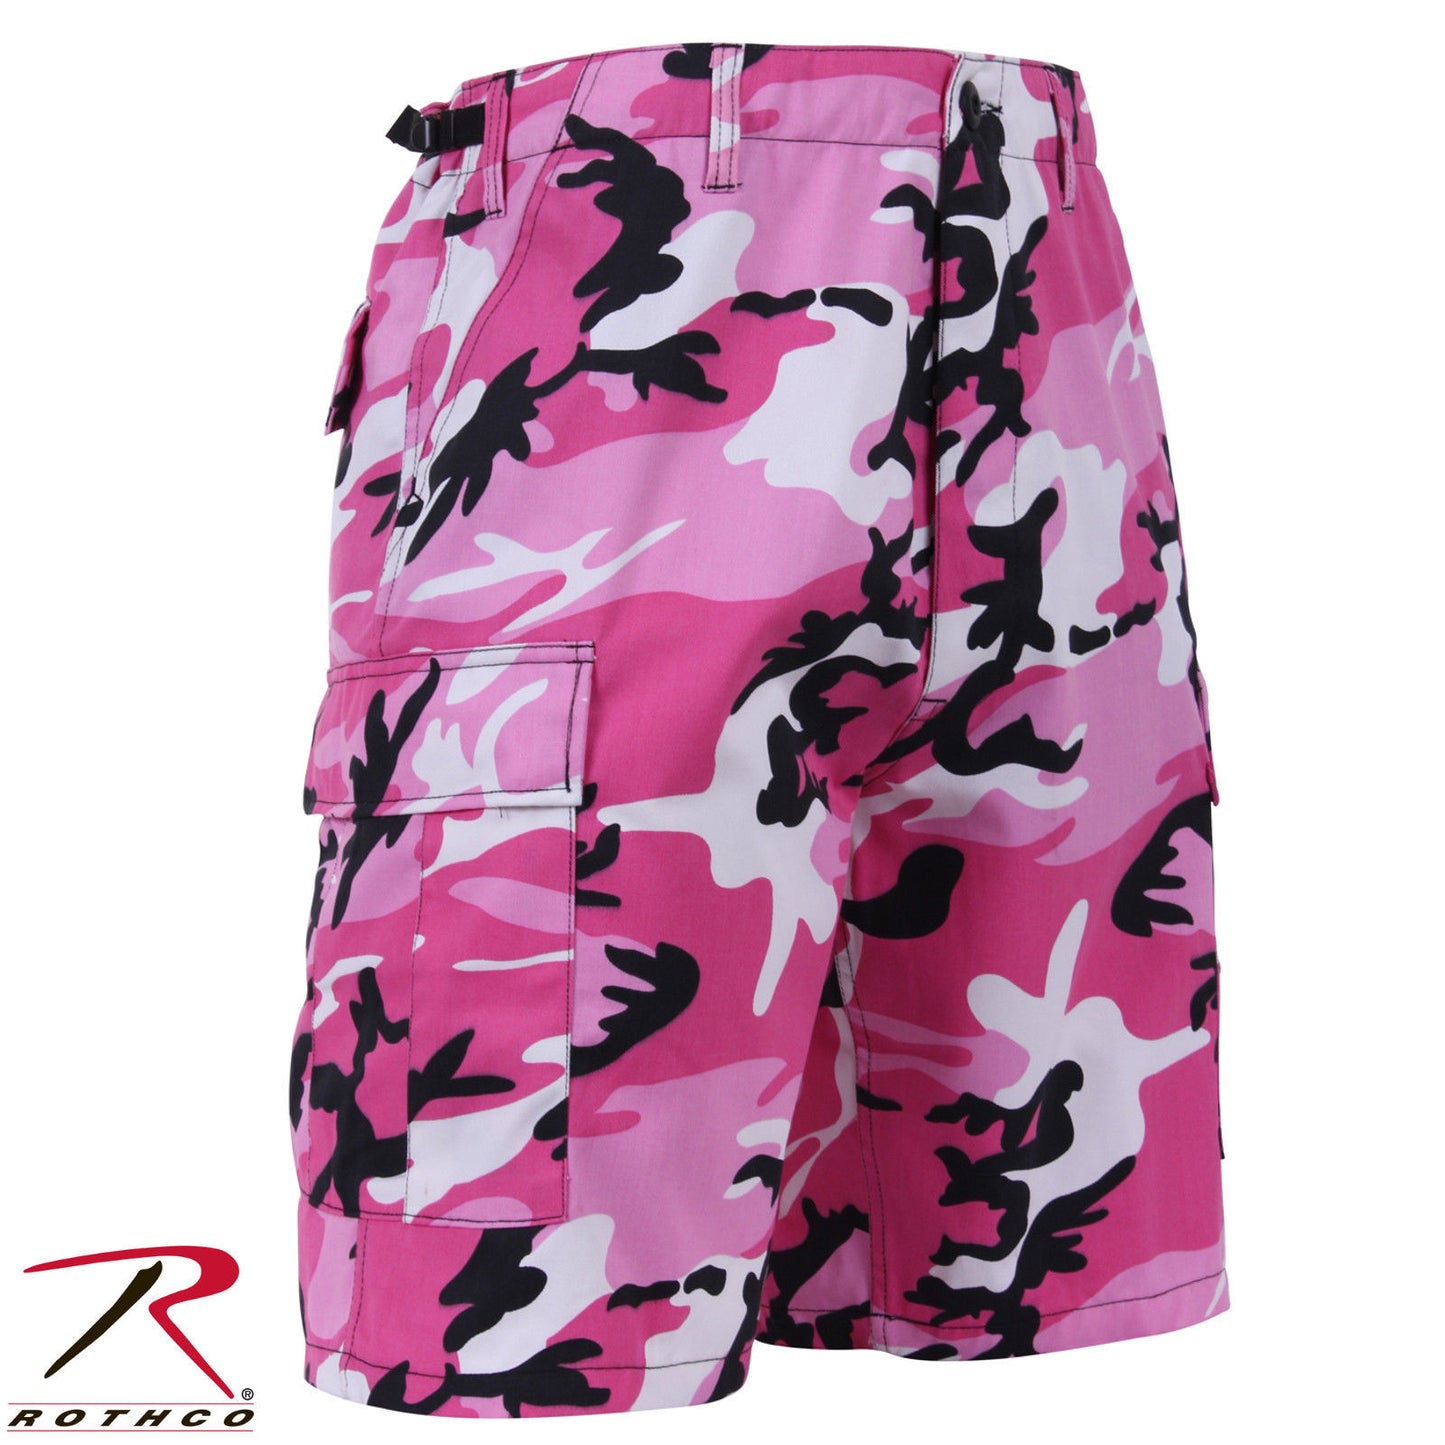 Men's Pink Camo BDU Shorts - Rothco Colored Camo GI Style Tactical Shorts